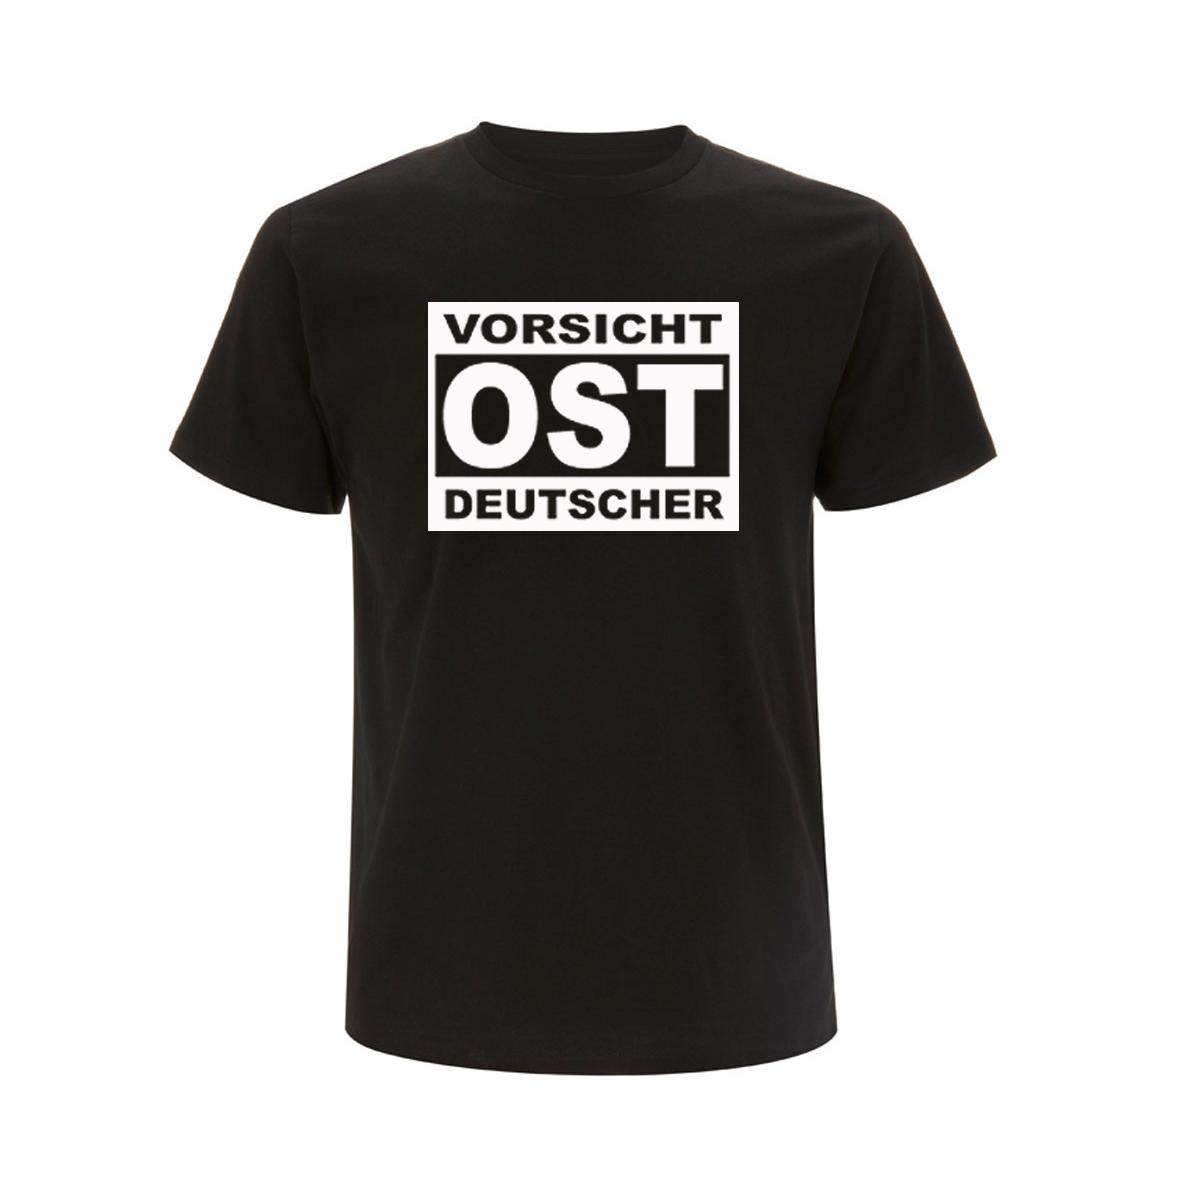 Vorsicht Ostdeutscher - Männer T-Shirt - schwarz